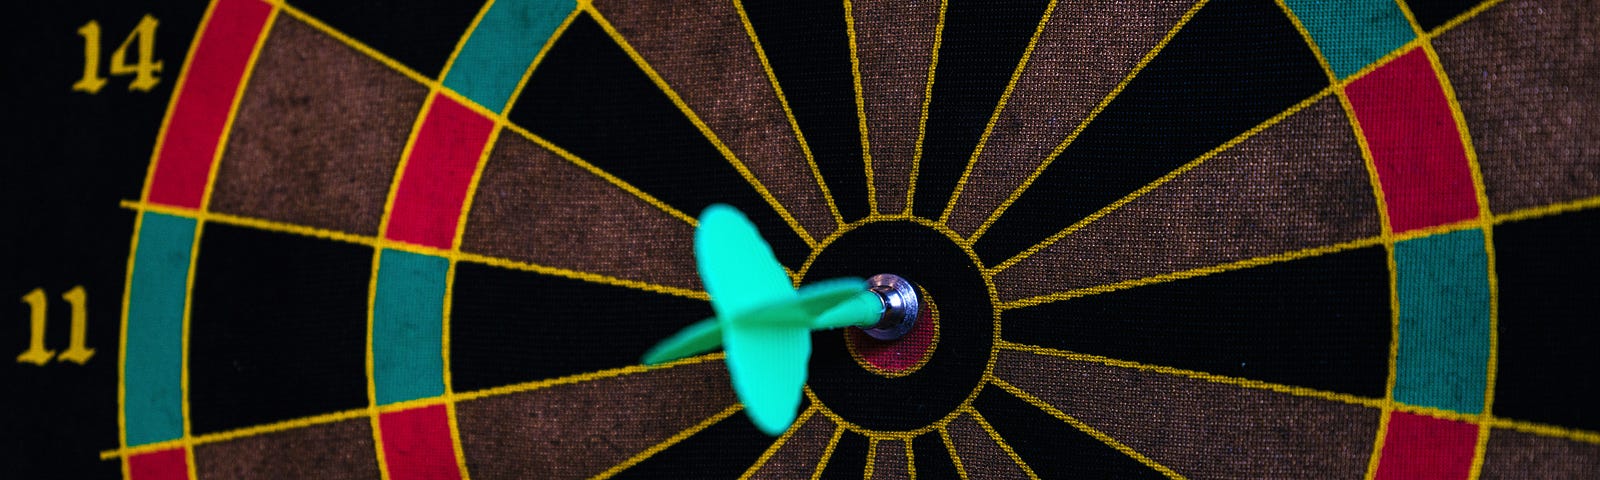 A dart has hit the bullseye